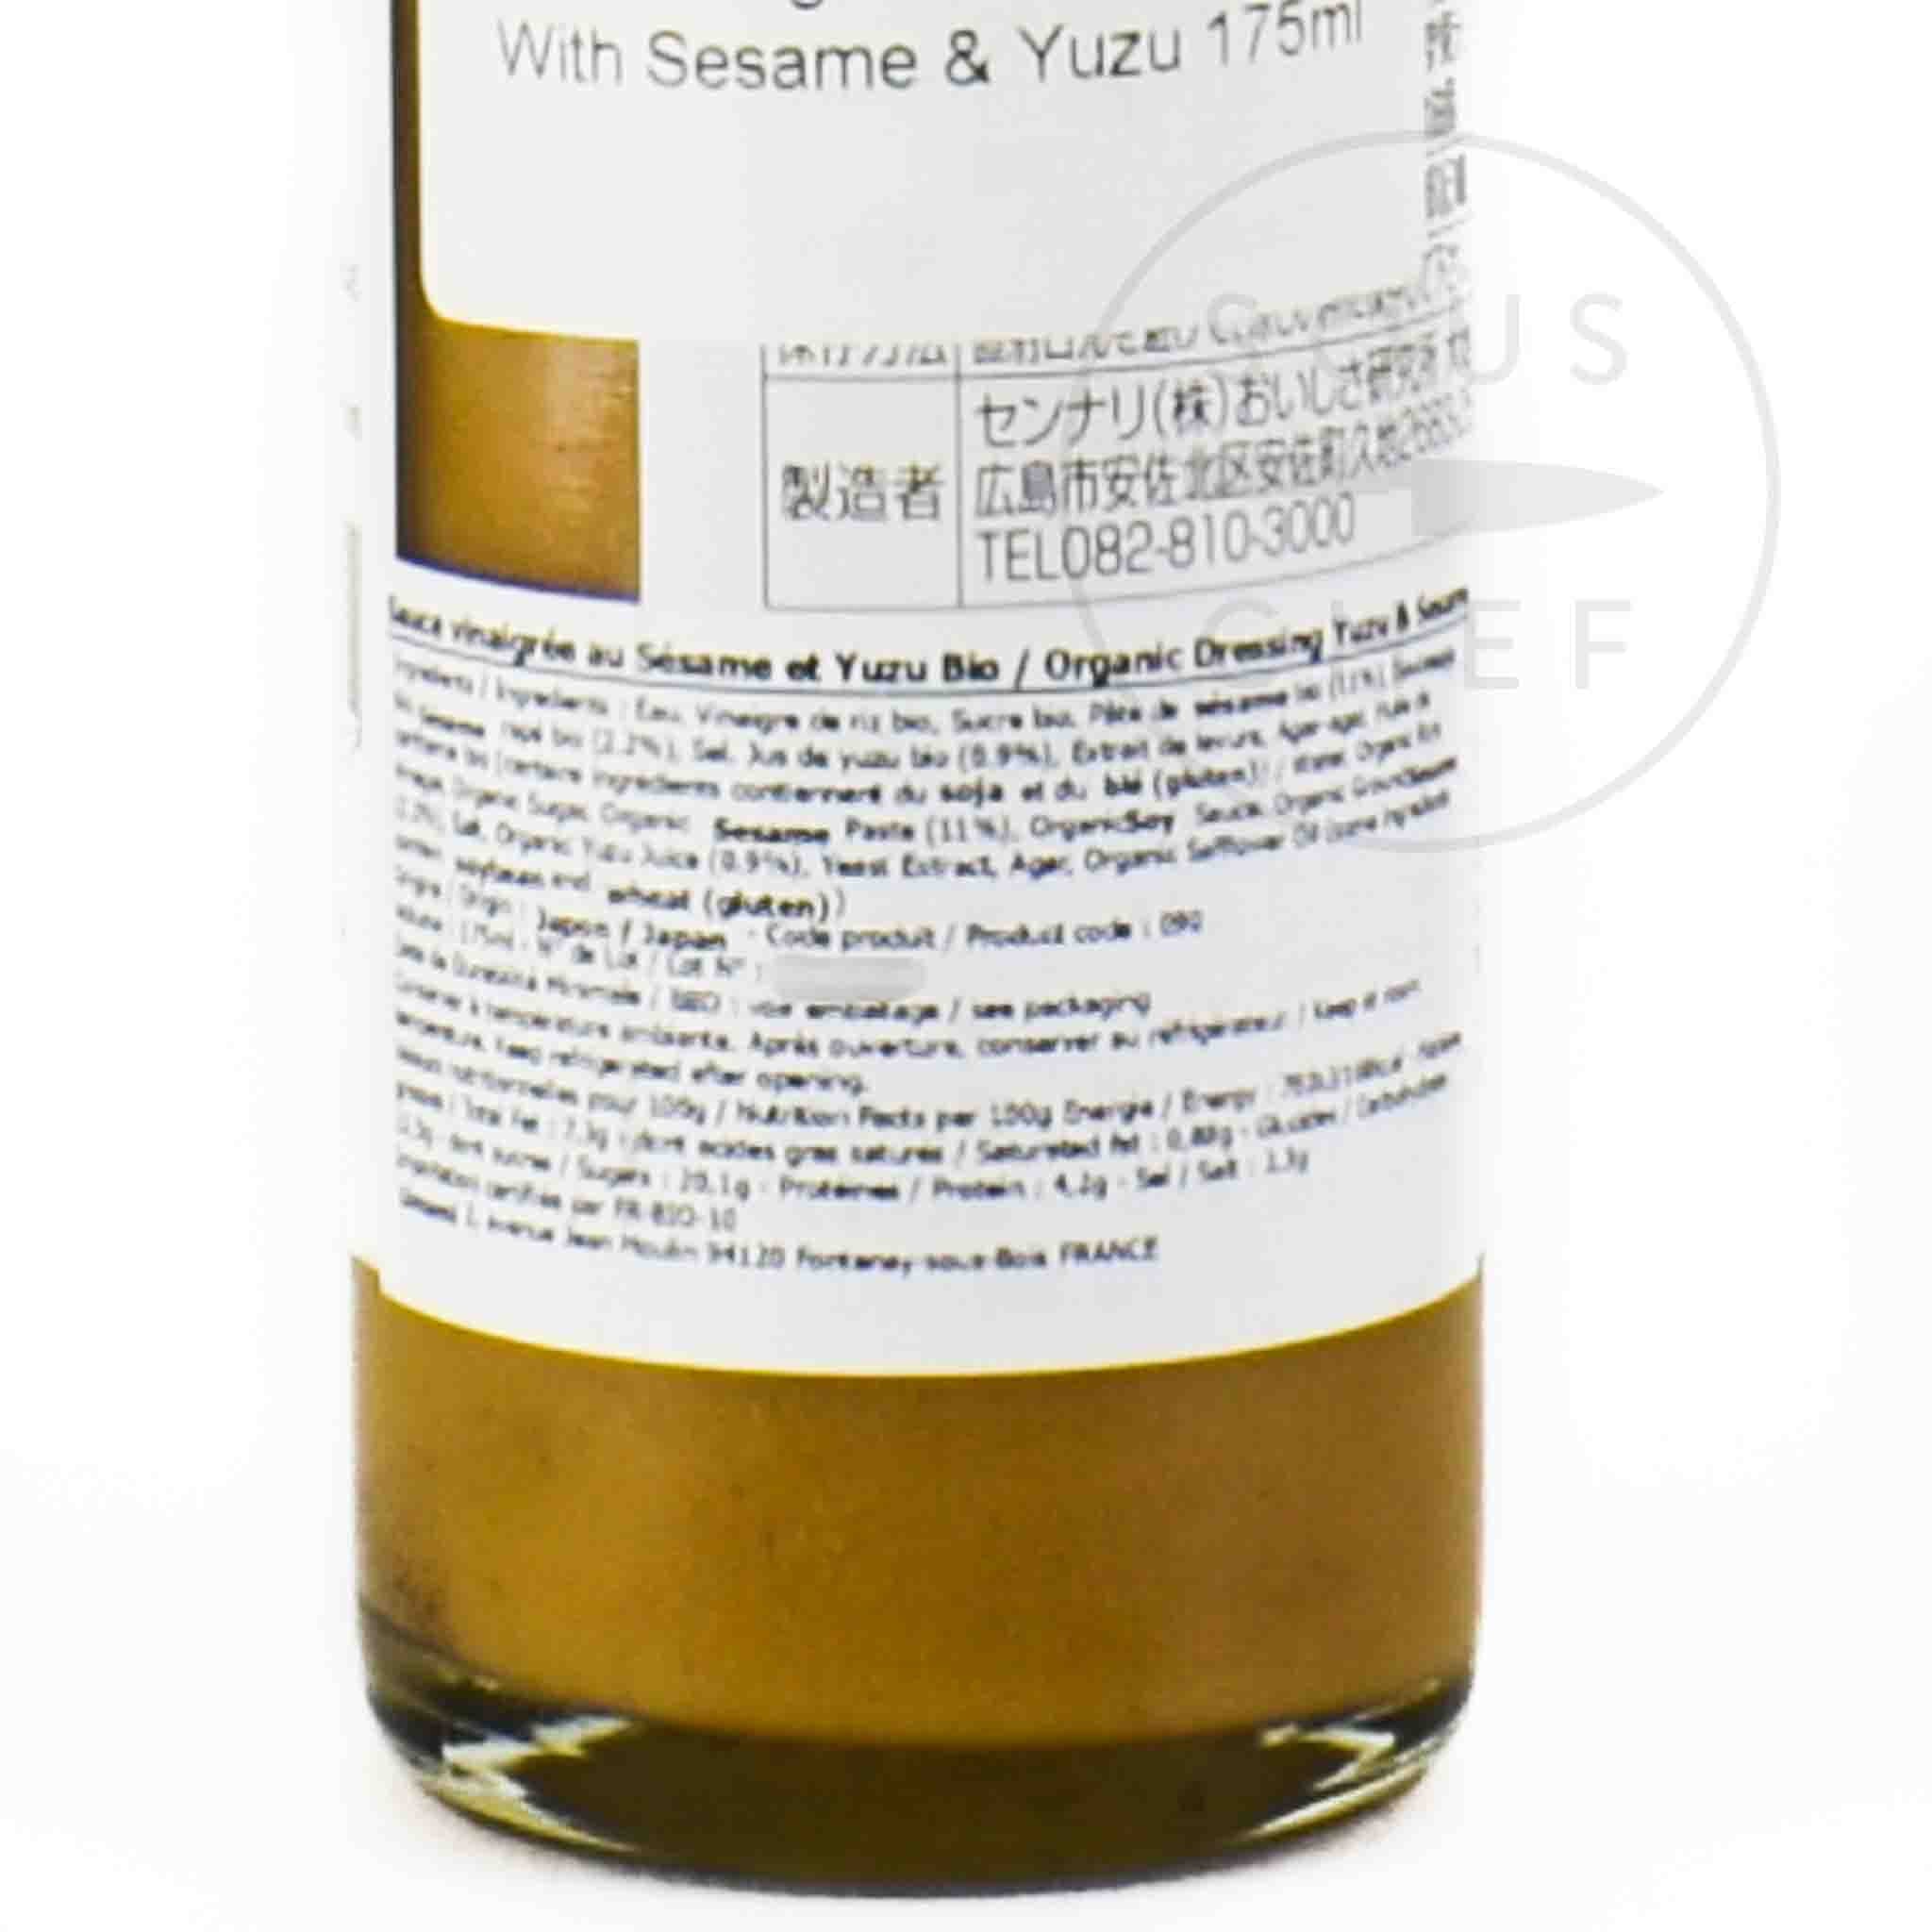 Organic Vinegar Sauce With Sesame & Yuzu 175ml Ingredients